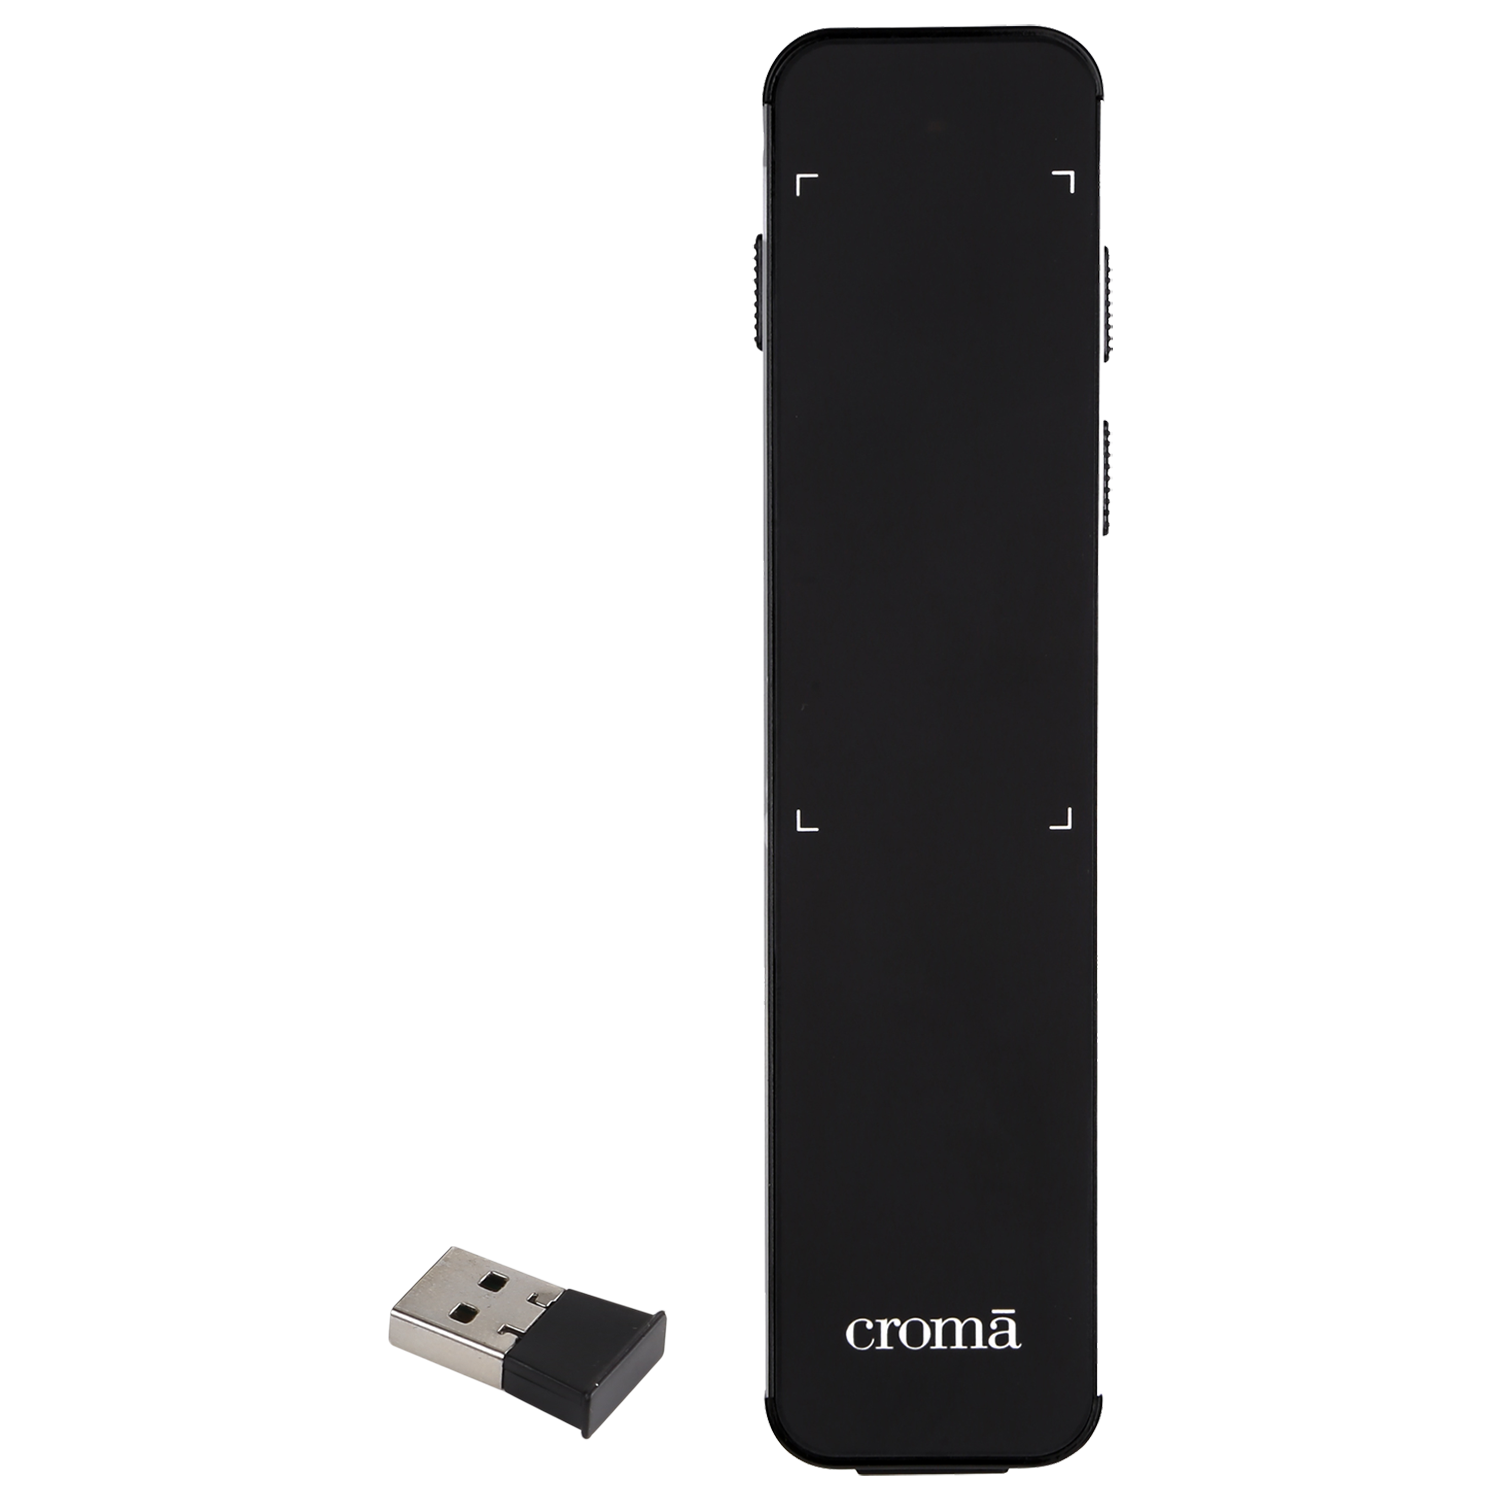 Croma Retail - Croma USB Receiver Laser Presenter (Single Finger Movement, CRXI3119, Black)